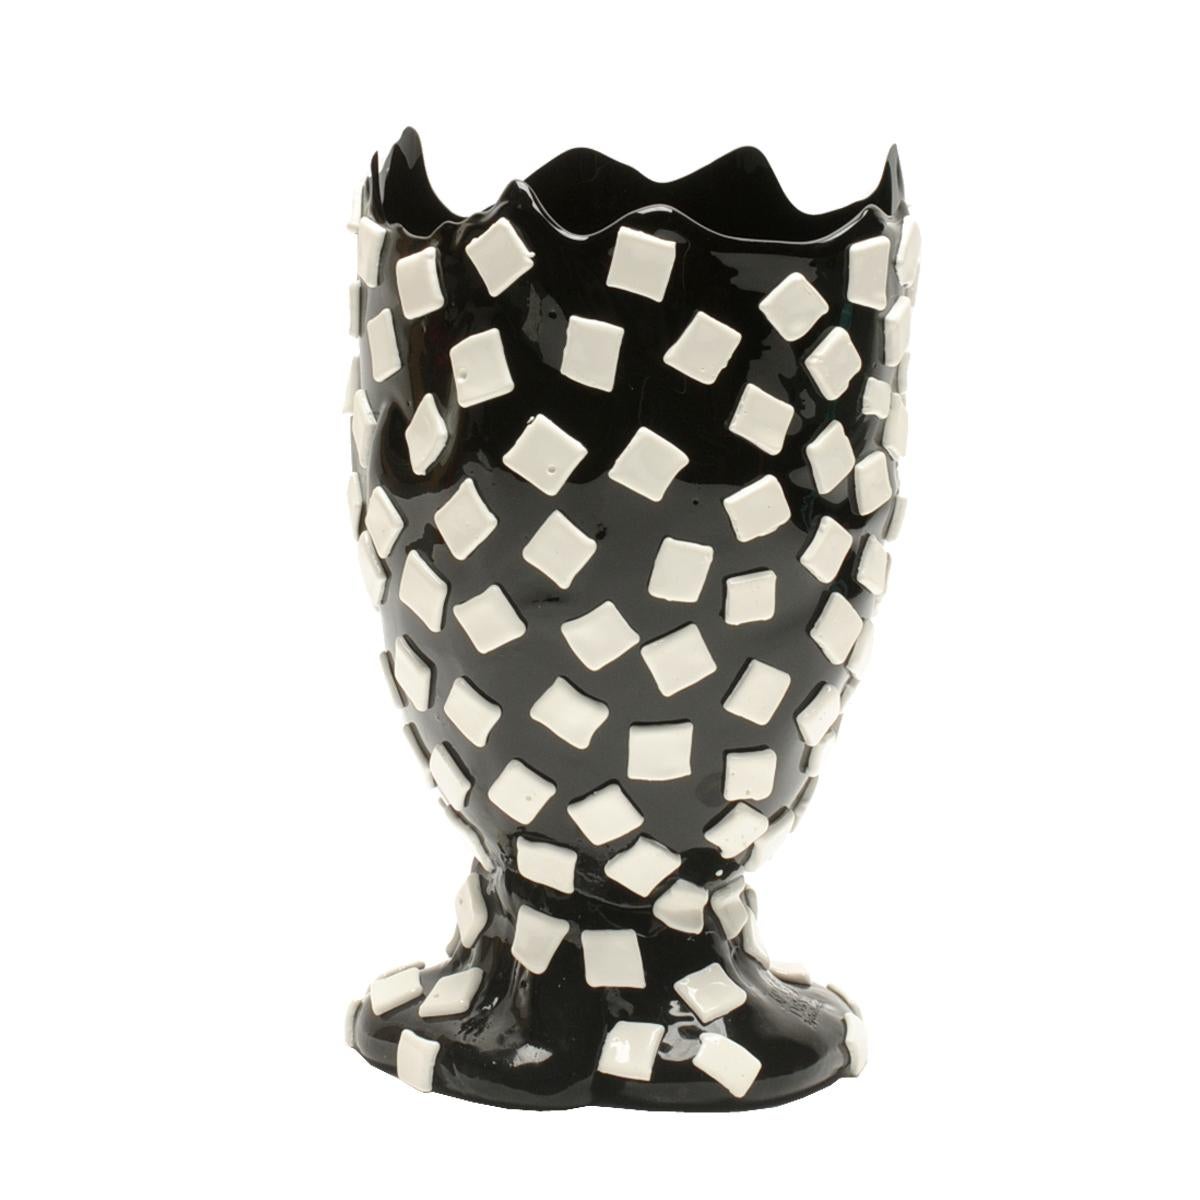 Italian Contemporary Gaetano Pesce Rock M Vase Resin Black White For Sale